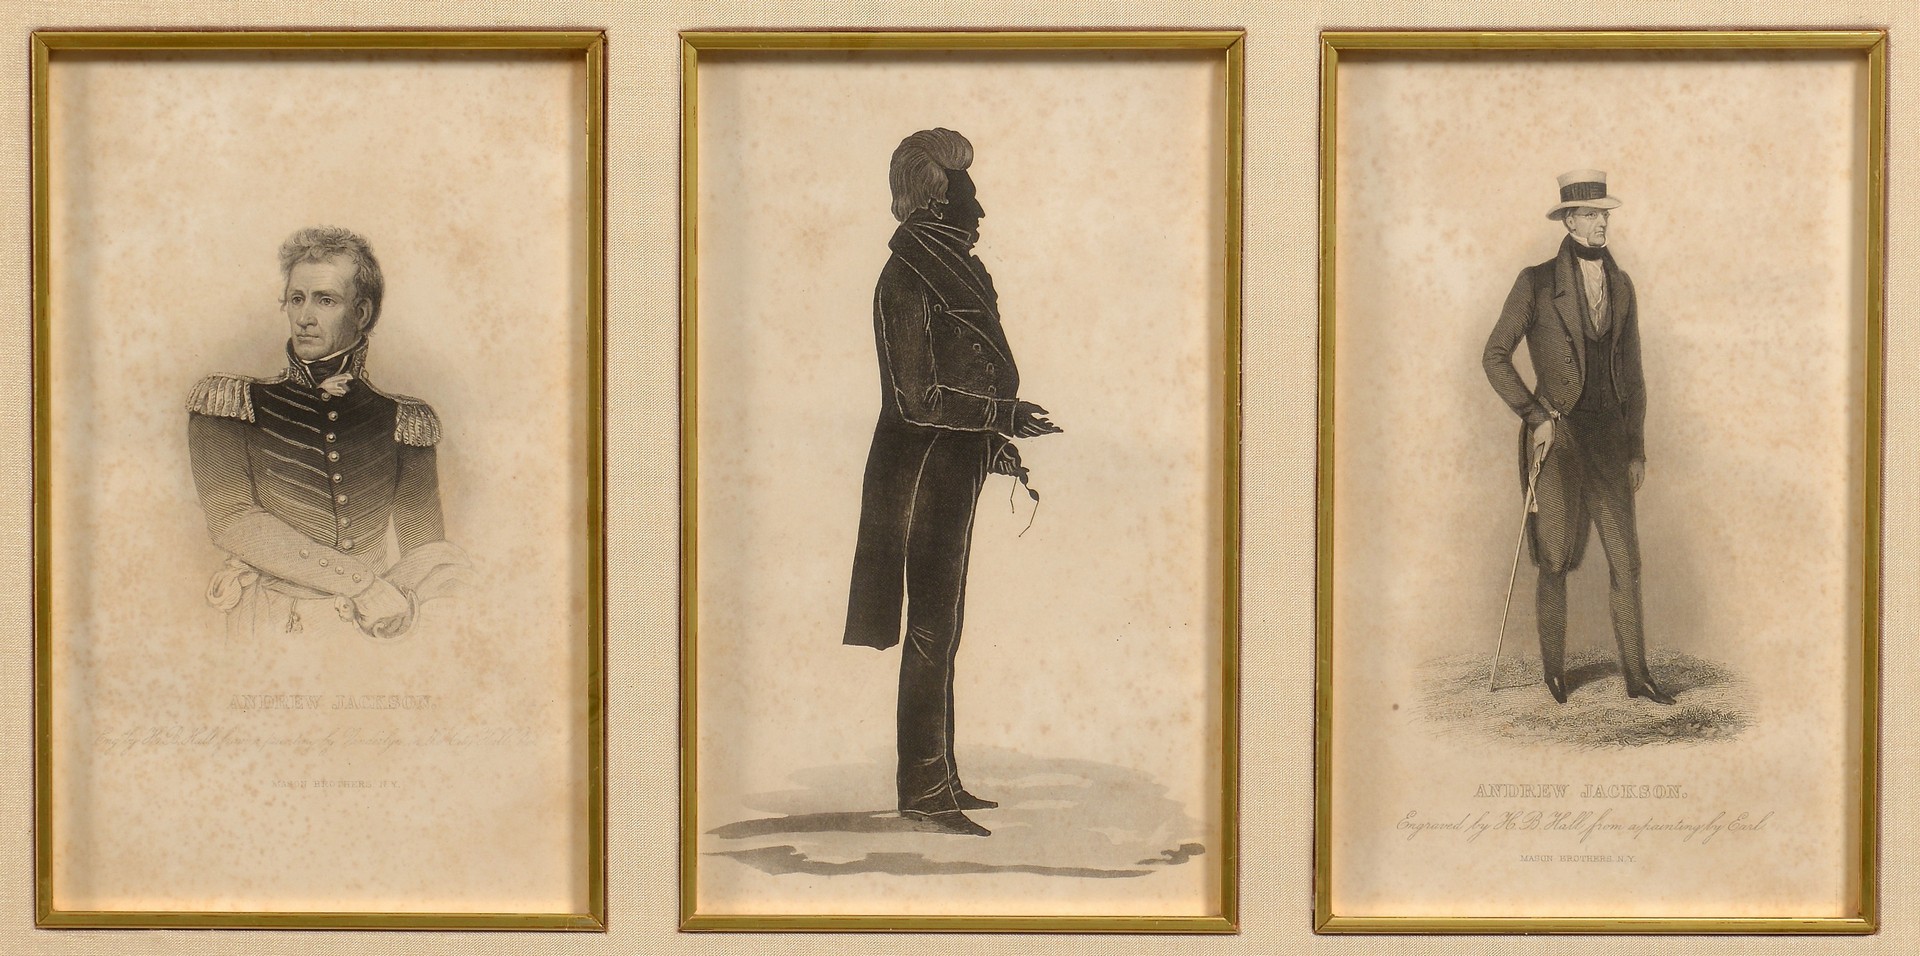 Lot 567: Andrew Jackson Prints, Zachary Taylor Campaign Pos